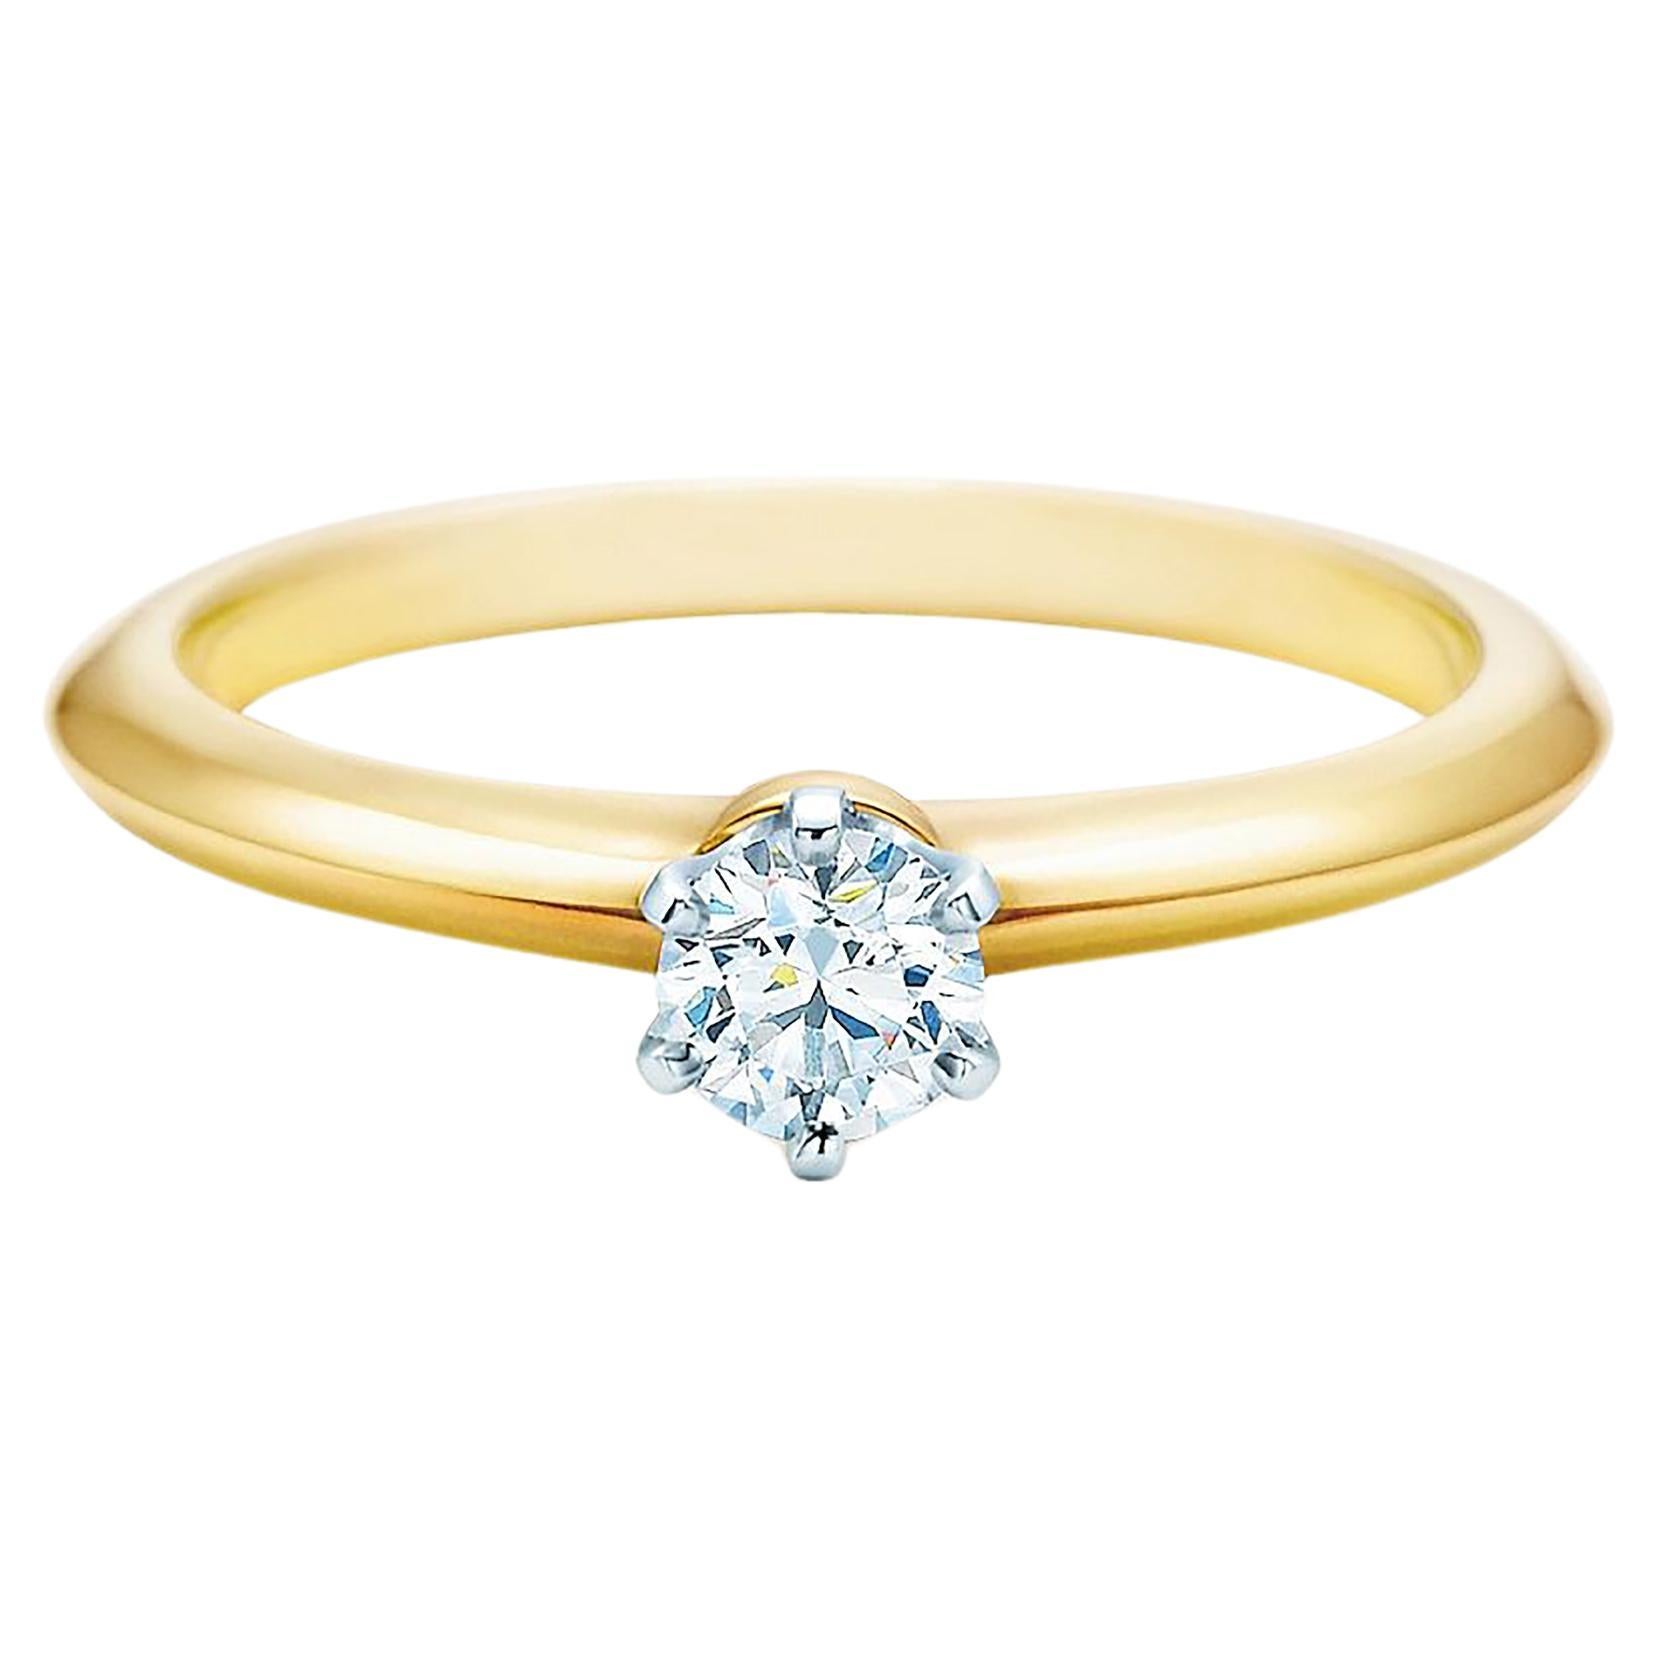 Tiffany & Co, bague solitaire en or 18 carats avec diamants de 0,47 carat